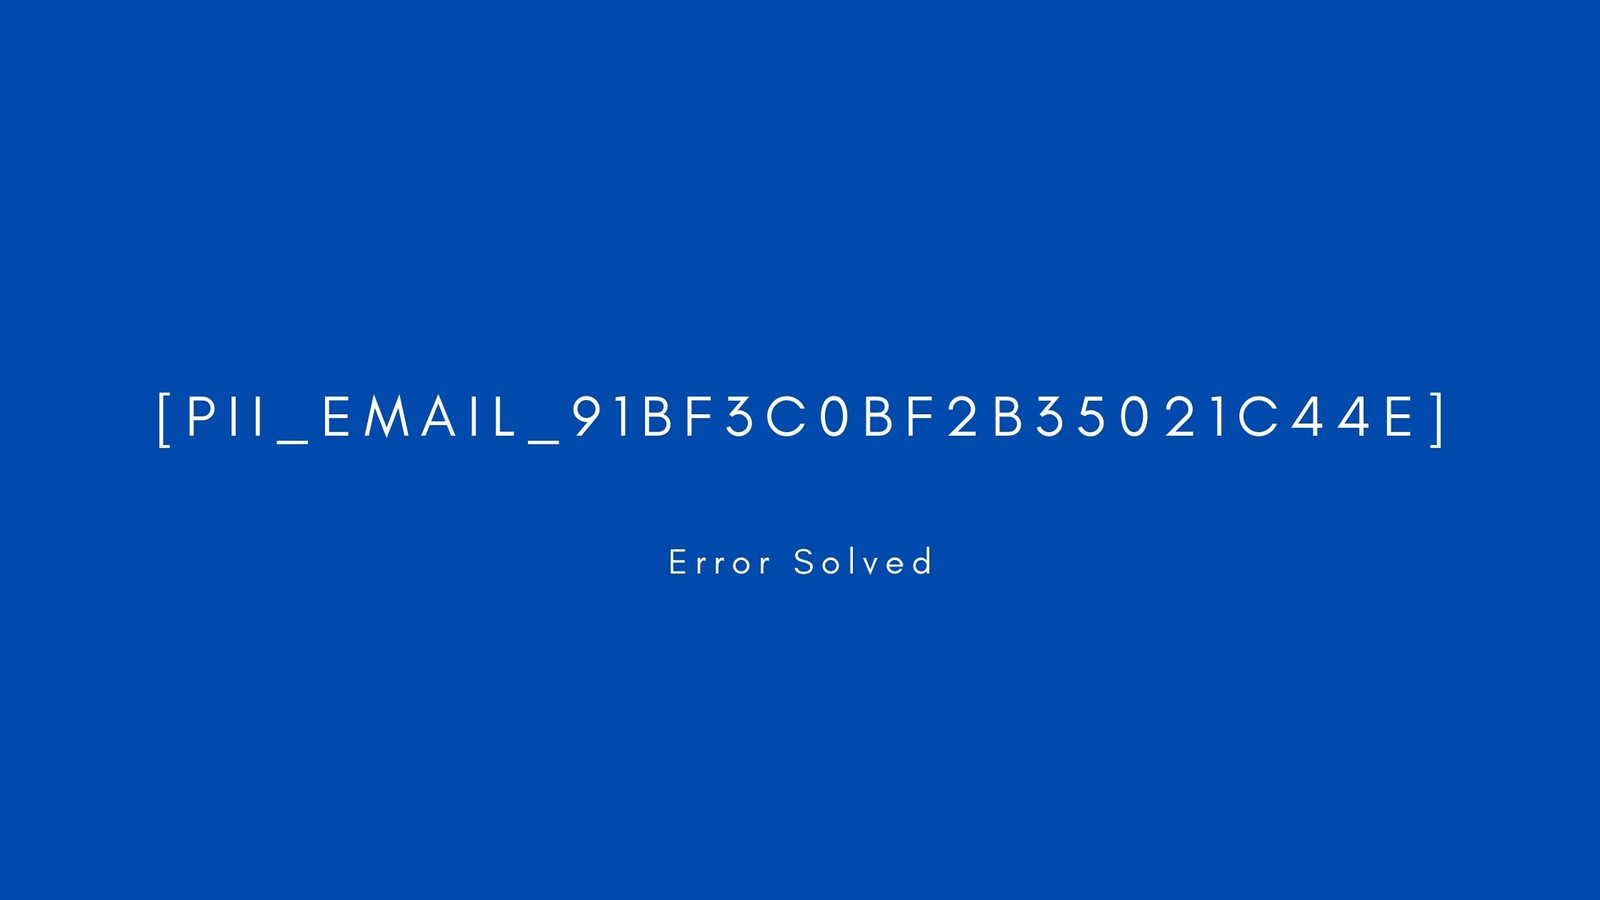 [pii_email_91bf3c0bf2b35021c44e] Error resolved